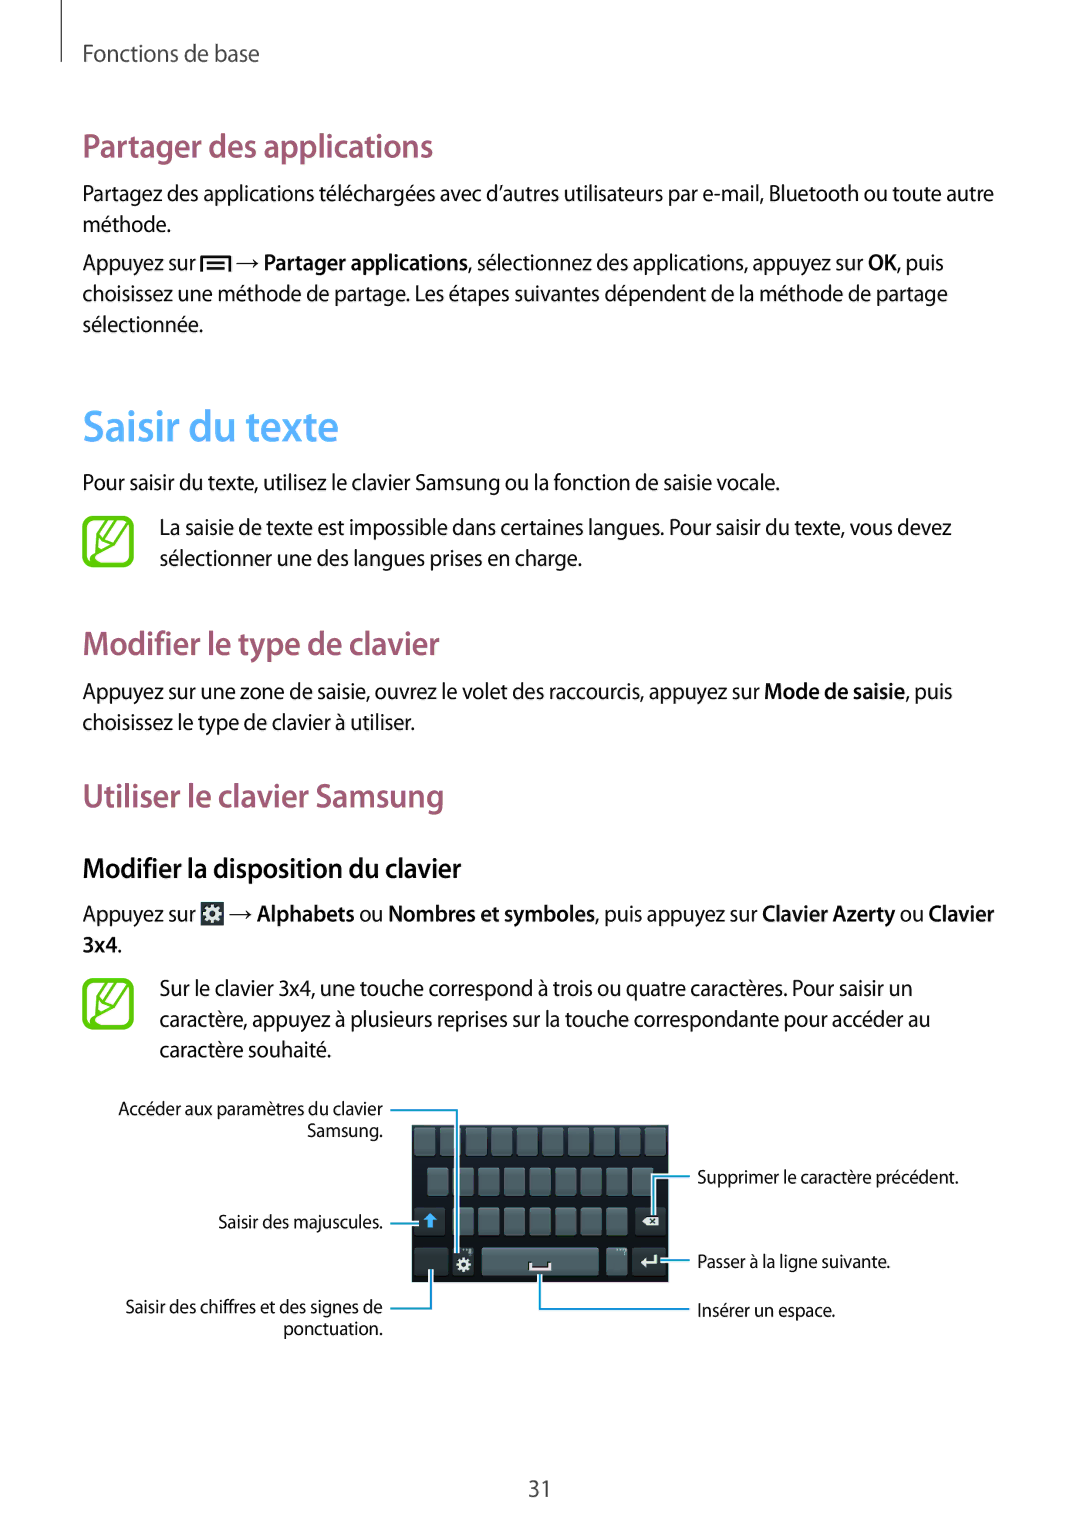 Samsung SM-G3500ZIAXEF, SM-G3500ZWAVGF manual Saisir du texte, Partager des applications, Modifier le type de clavier 